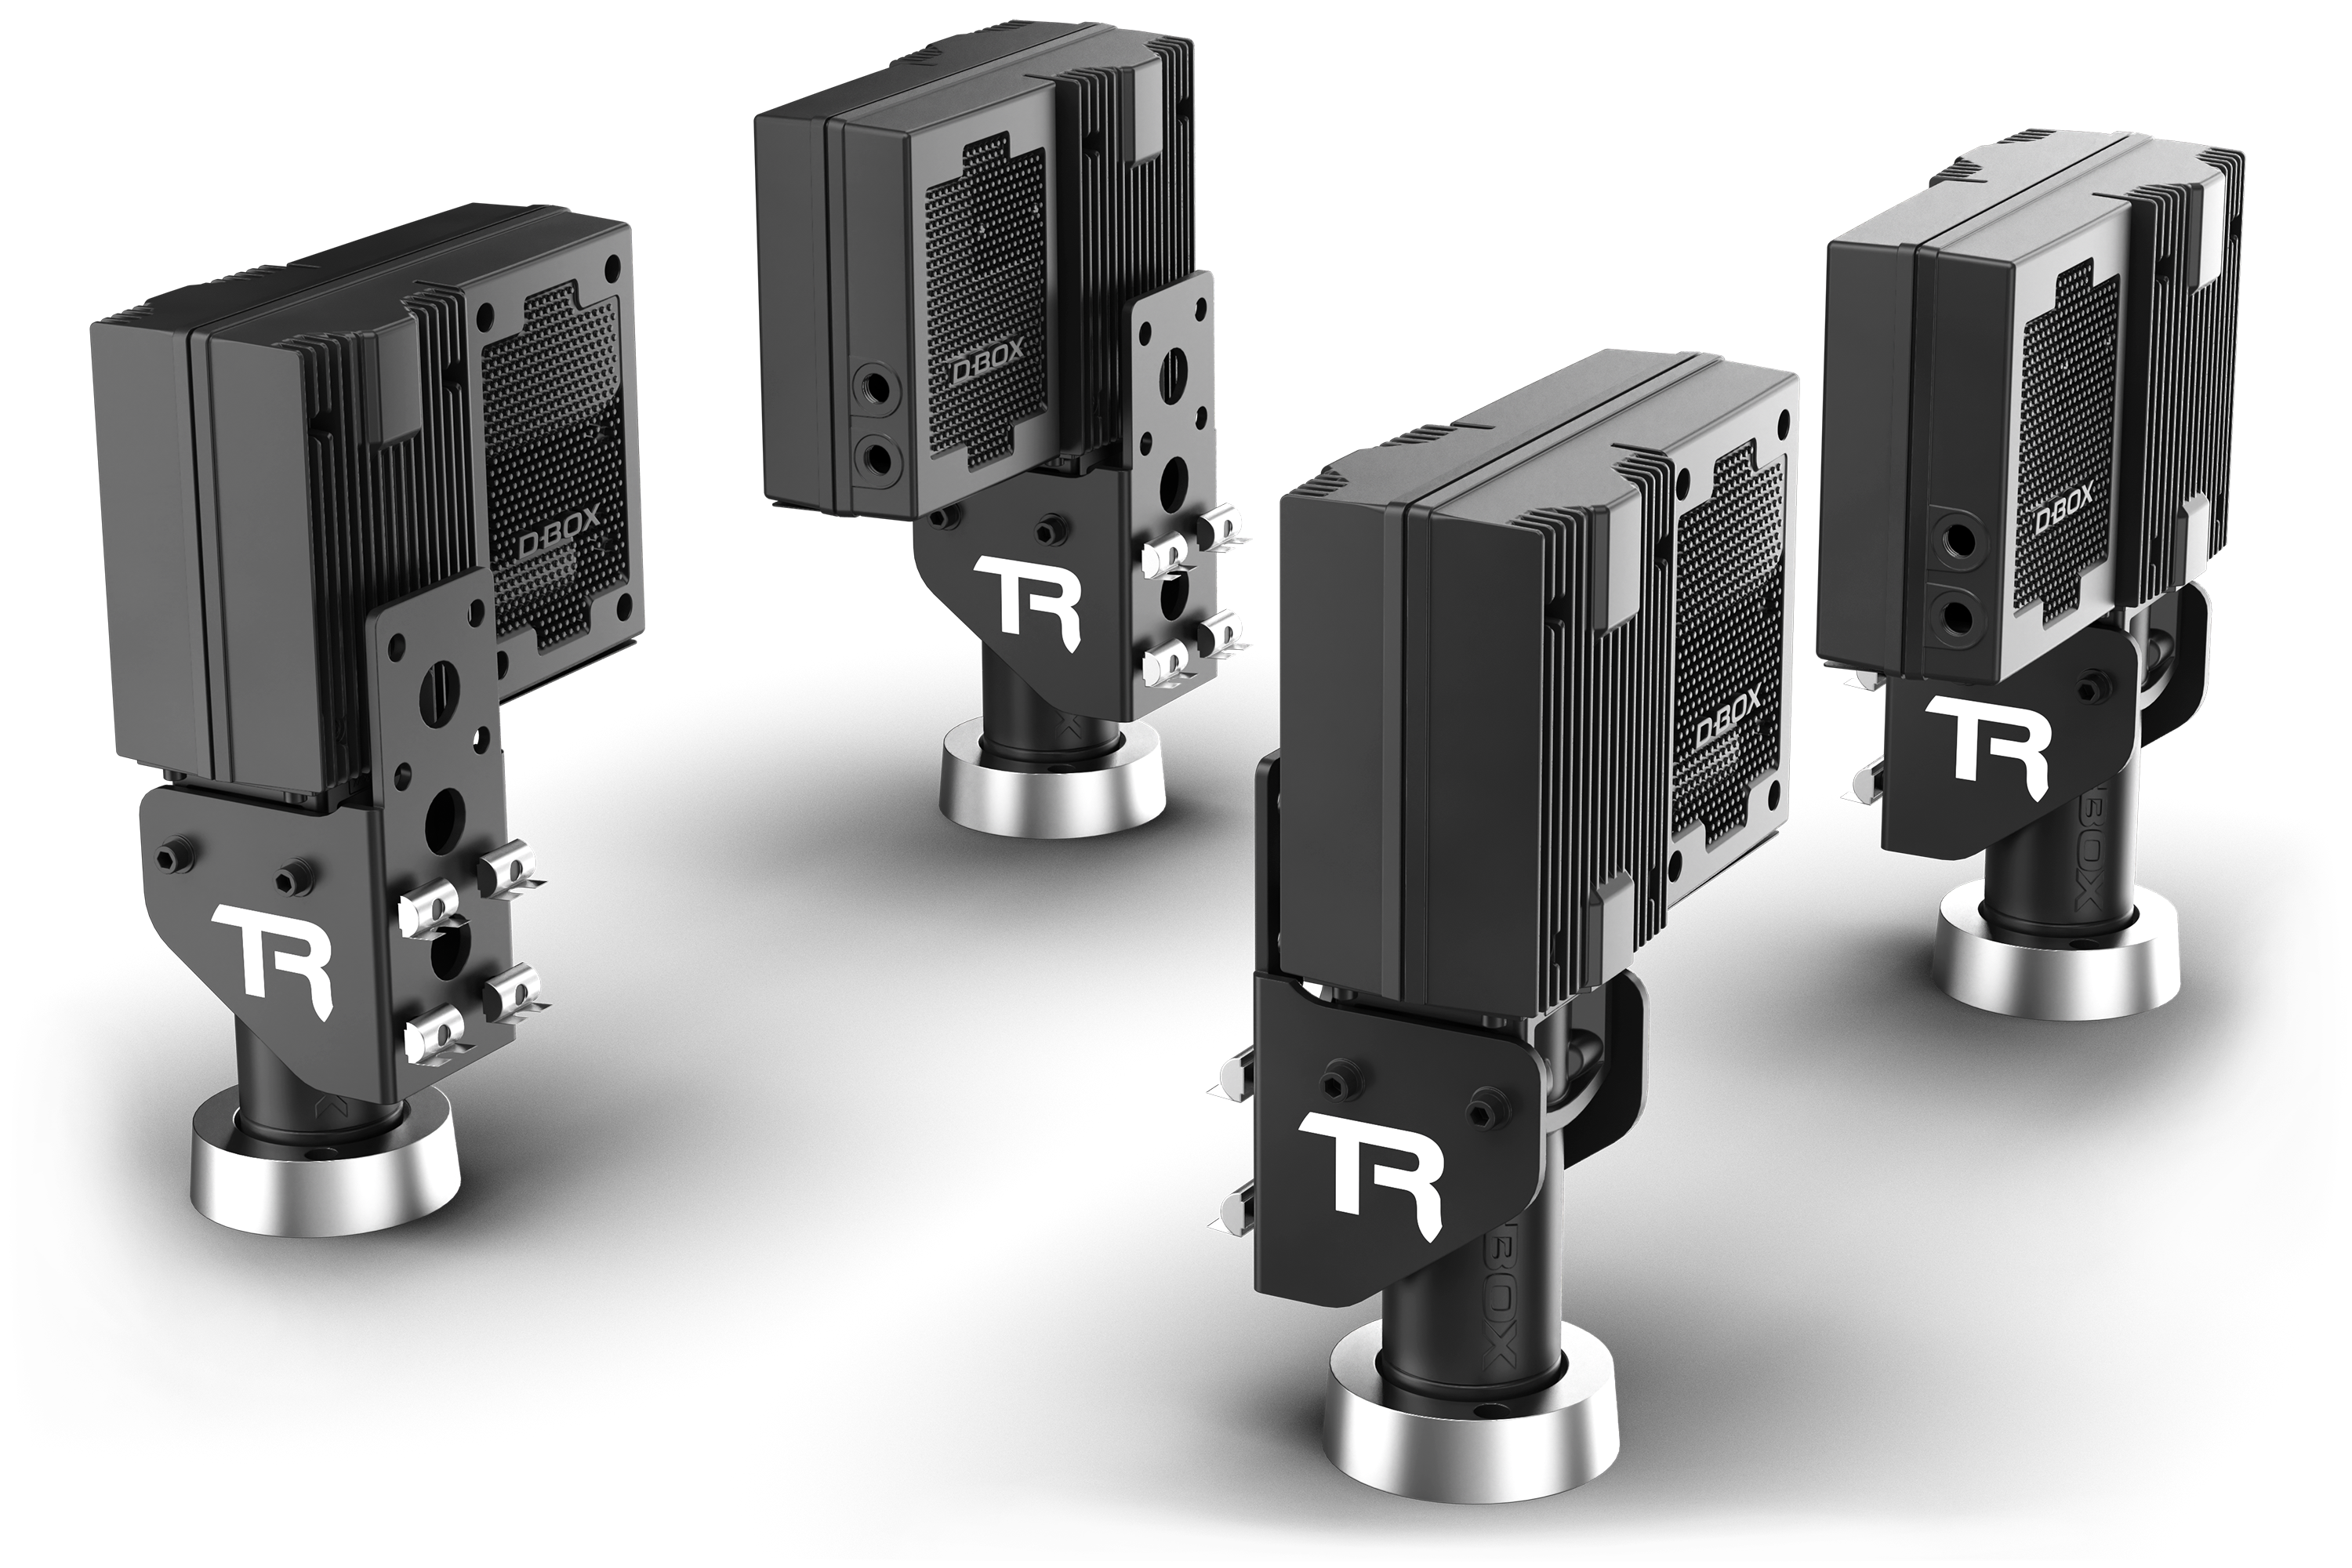 D-BOX GEN 5 4250i Haptic System with 4 motion actuators (1.5" stroke/travel range)